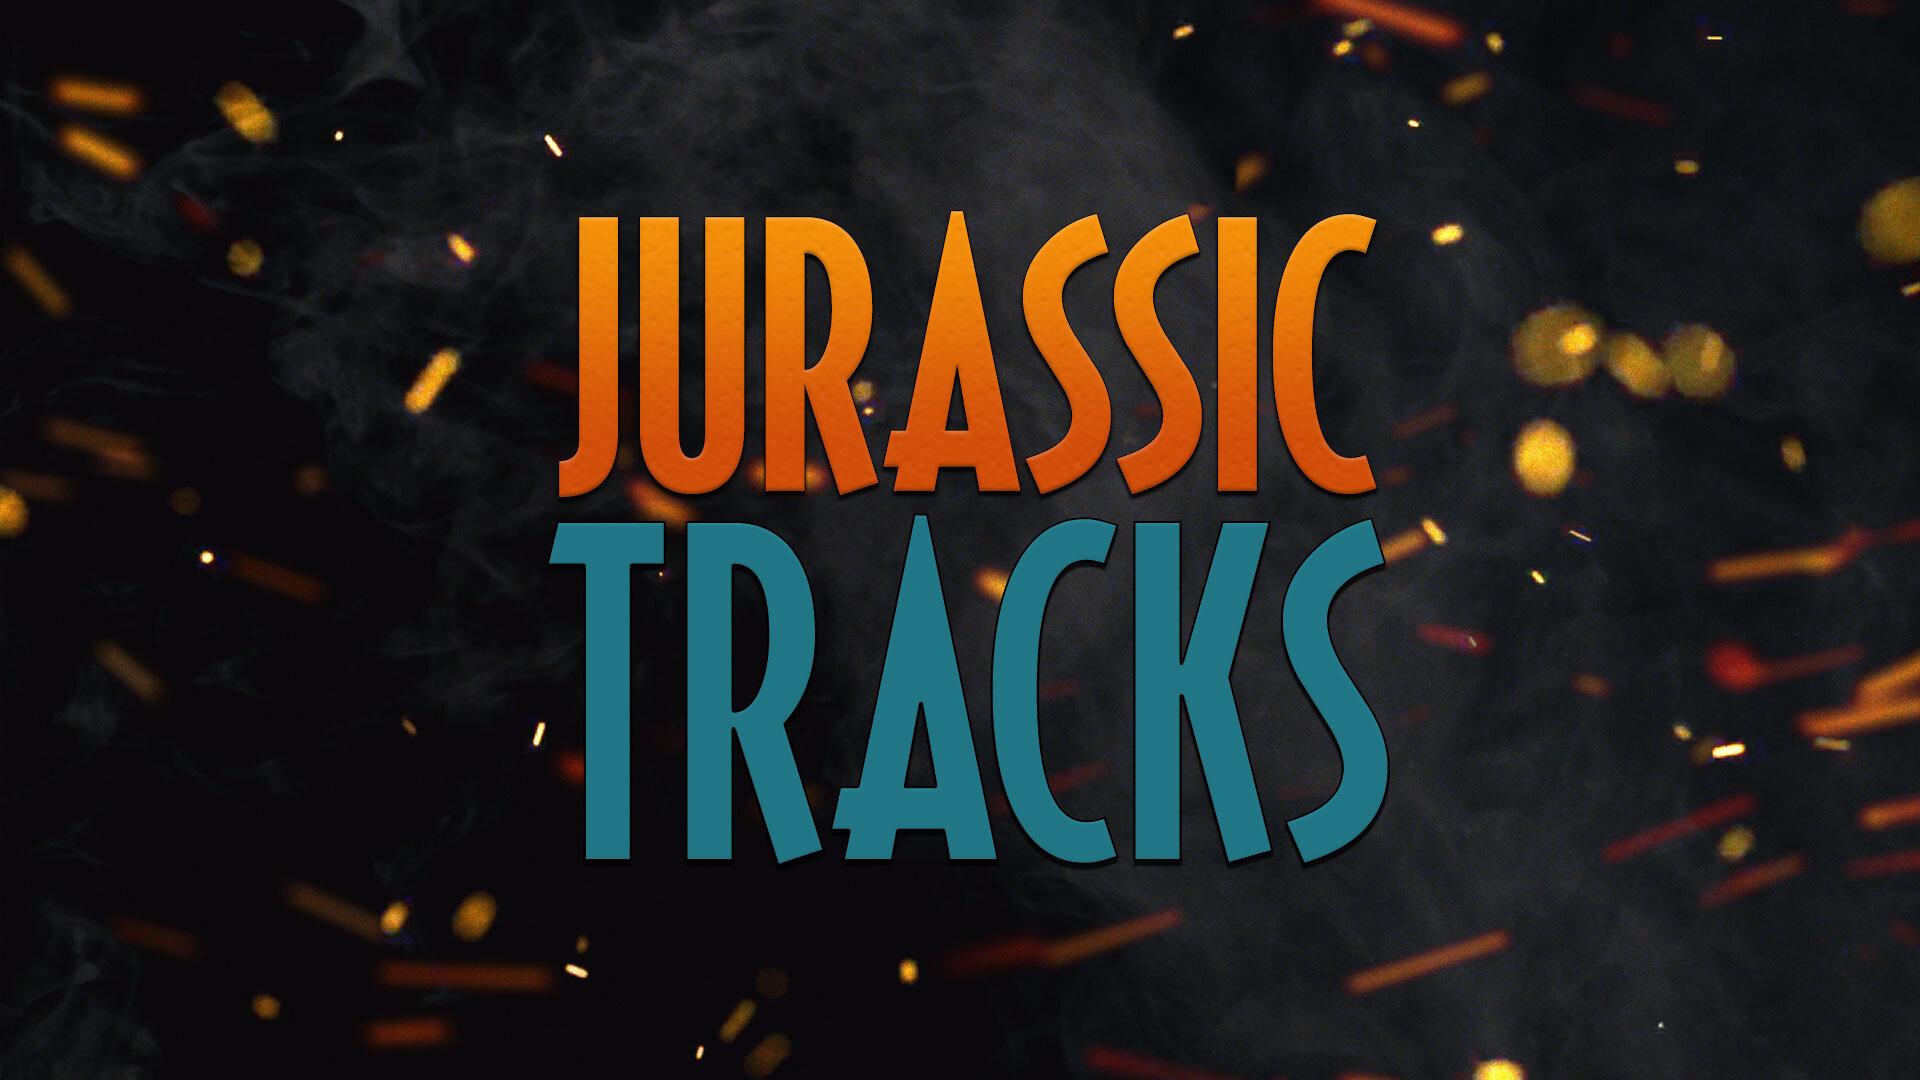 Jurassic-Tracks.jpg